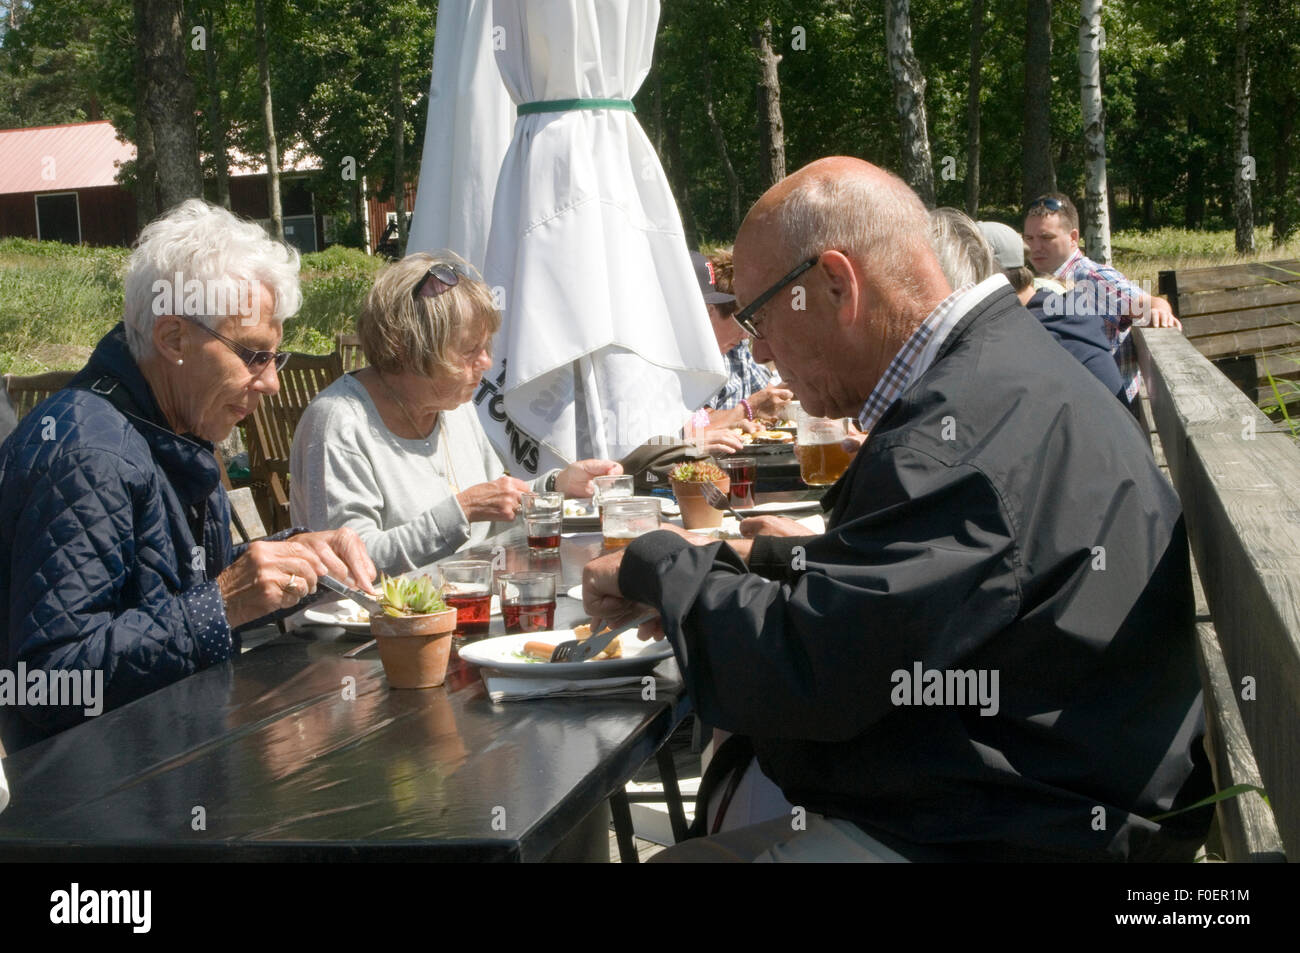 Schweden Schwedische Rentner Pensionen pension skandinavischen Staat Skandinavier Pensionierung Einkommen Mahlzeit essen Restaurant verbringen po Stockfoto